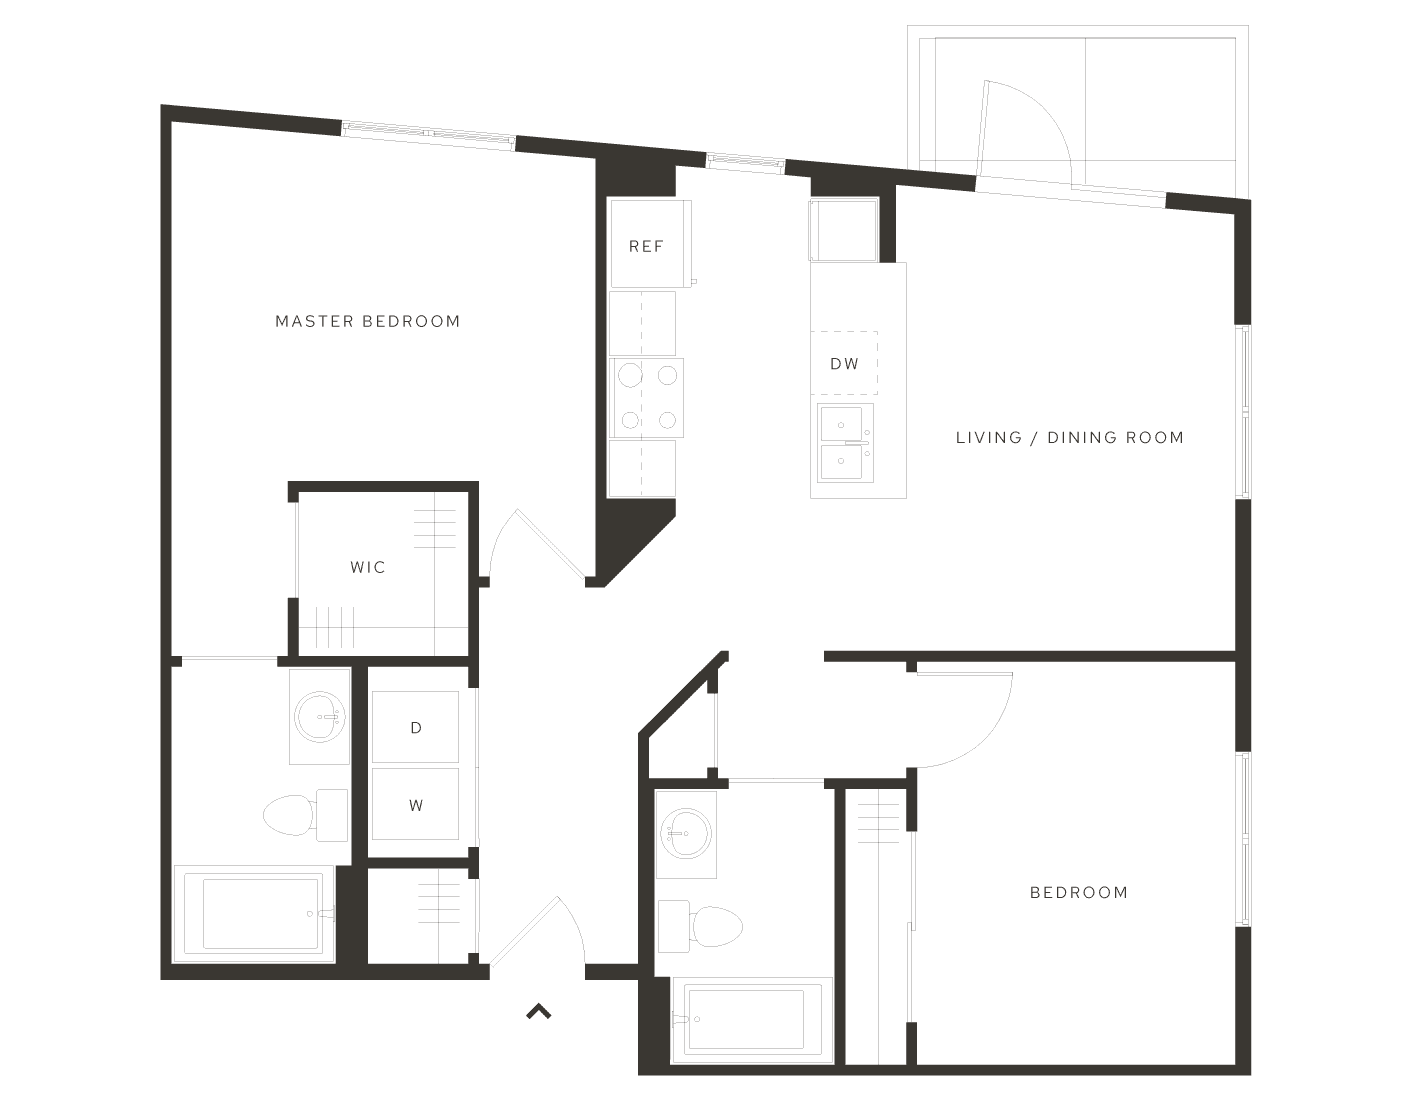 Luxury 2-bedroom apartment floor plan at Avia in downtown Salt Lake City, UT